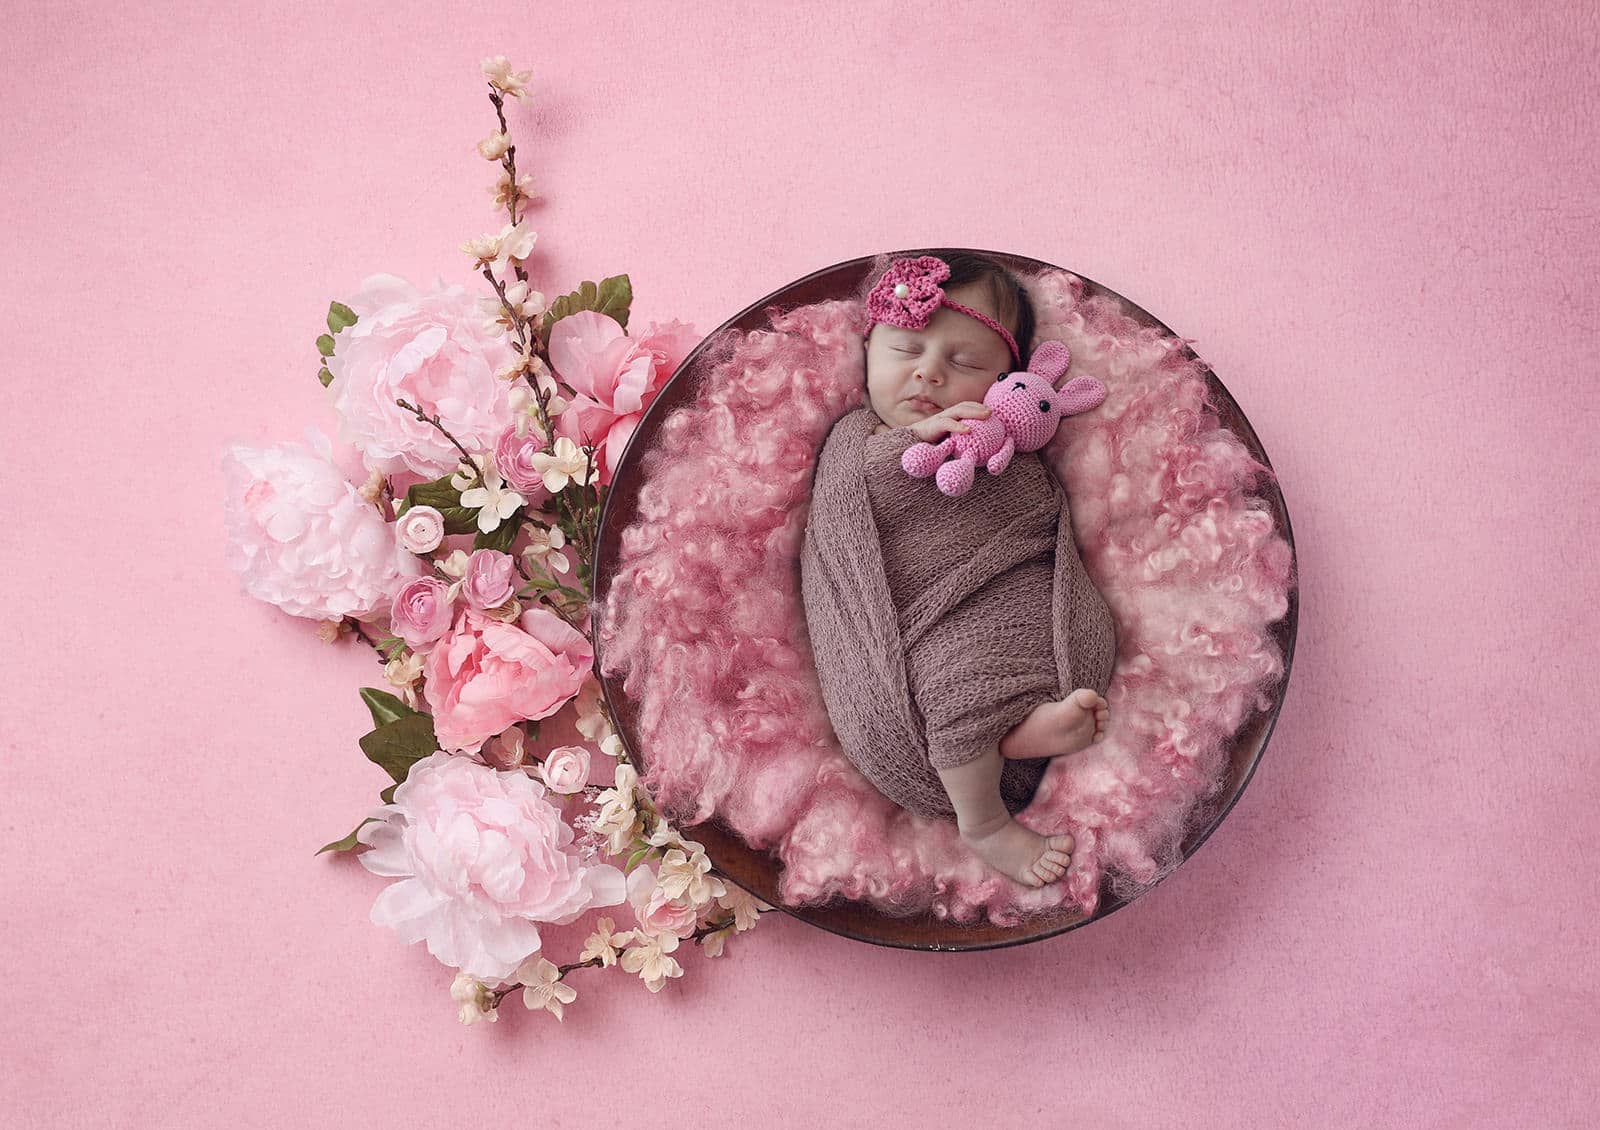 Tania-Flores-Photography-Newborn-Fotos-1